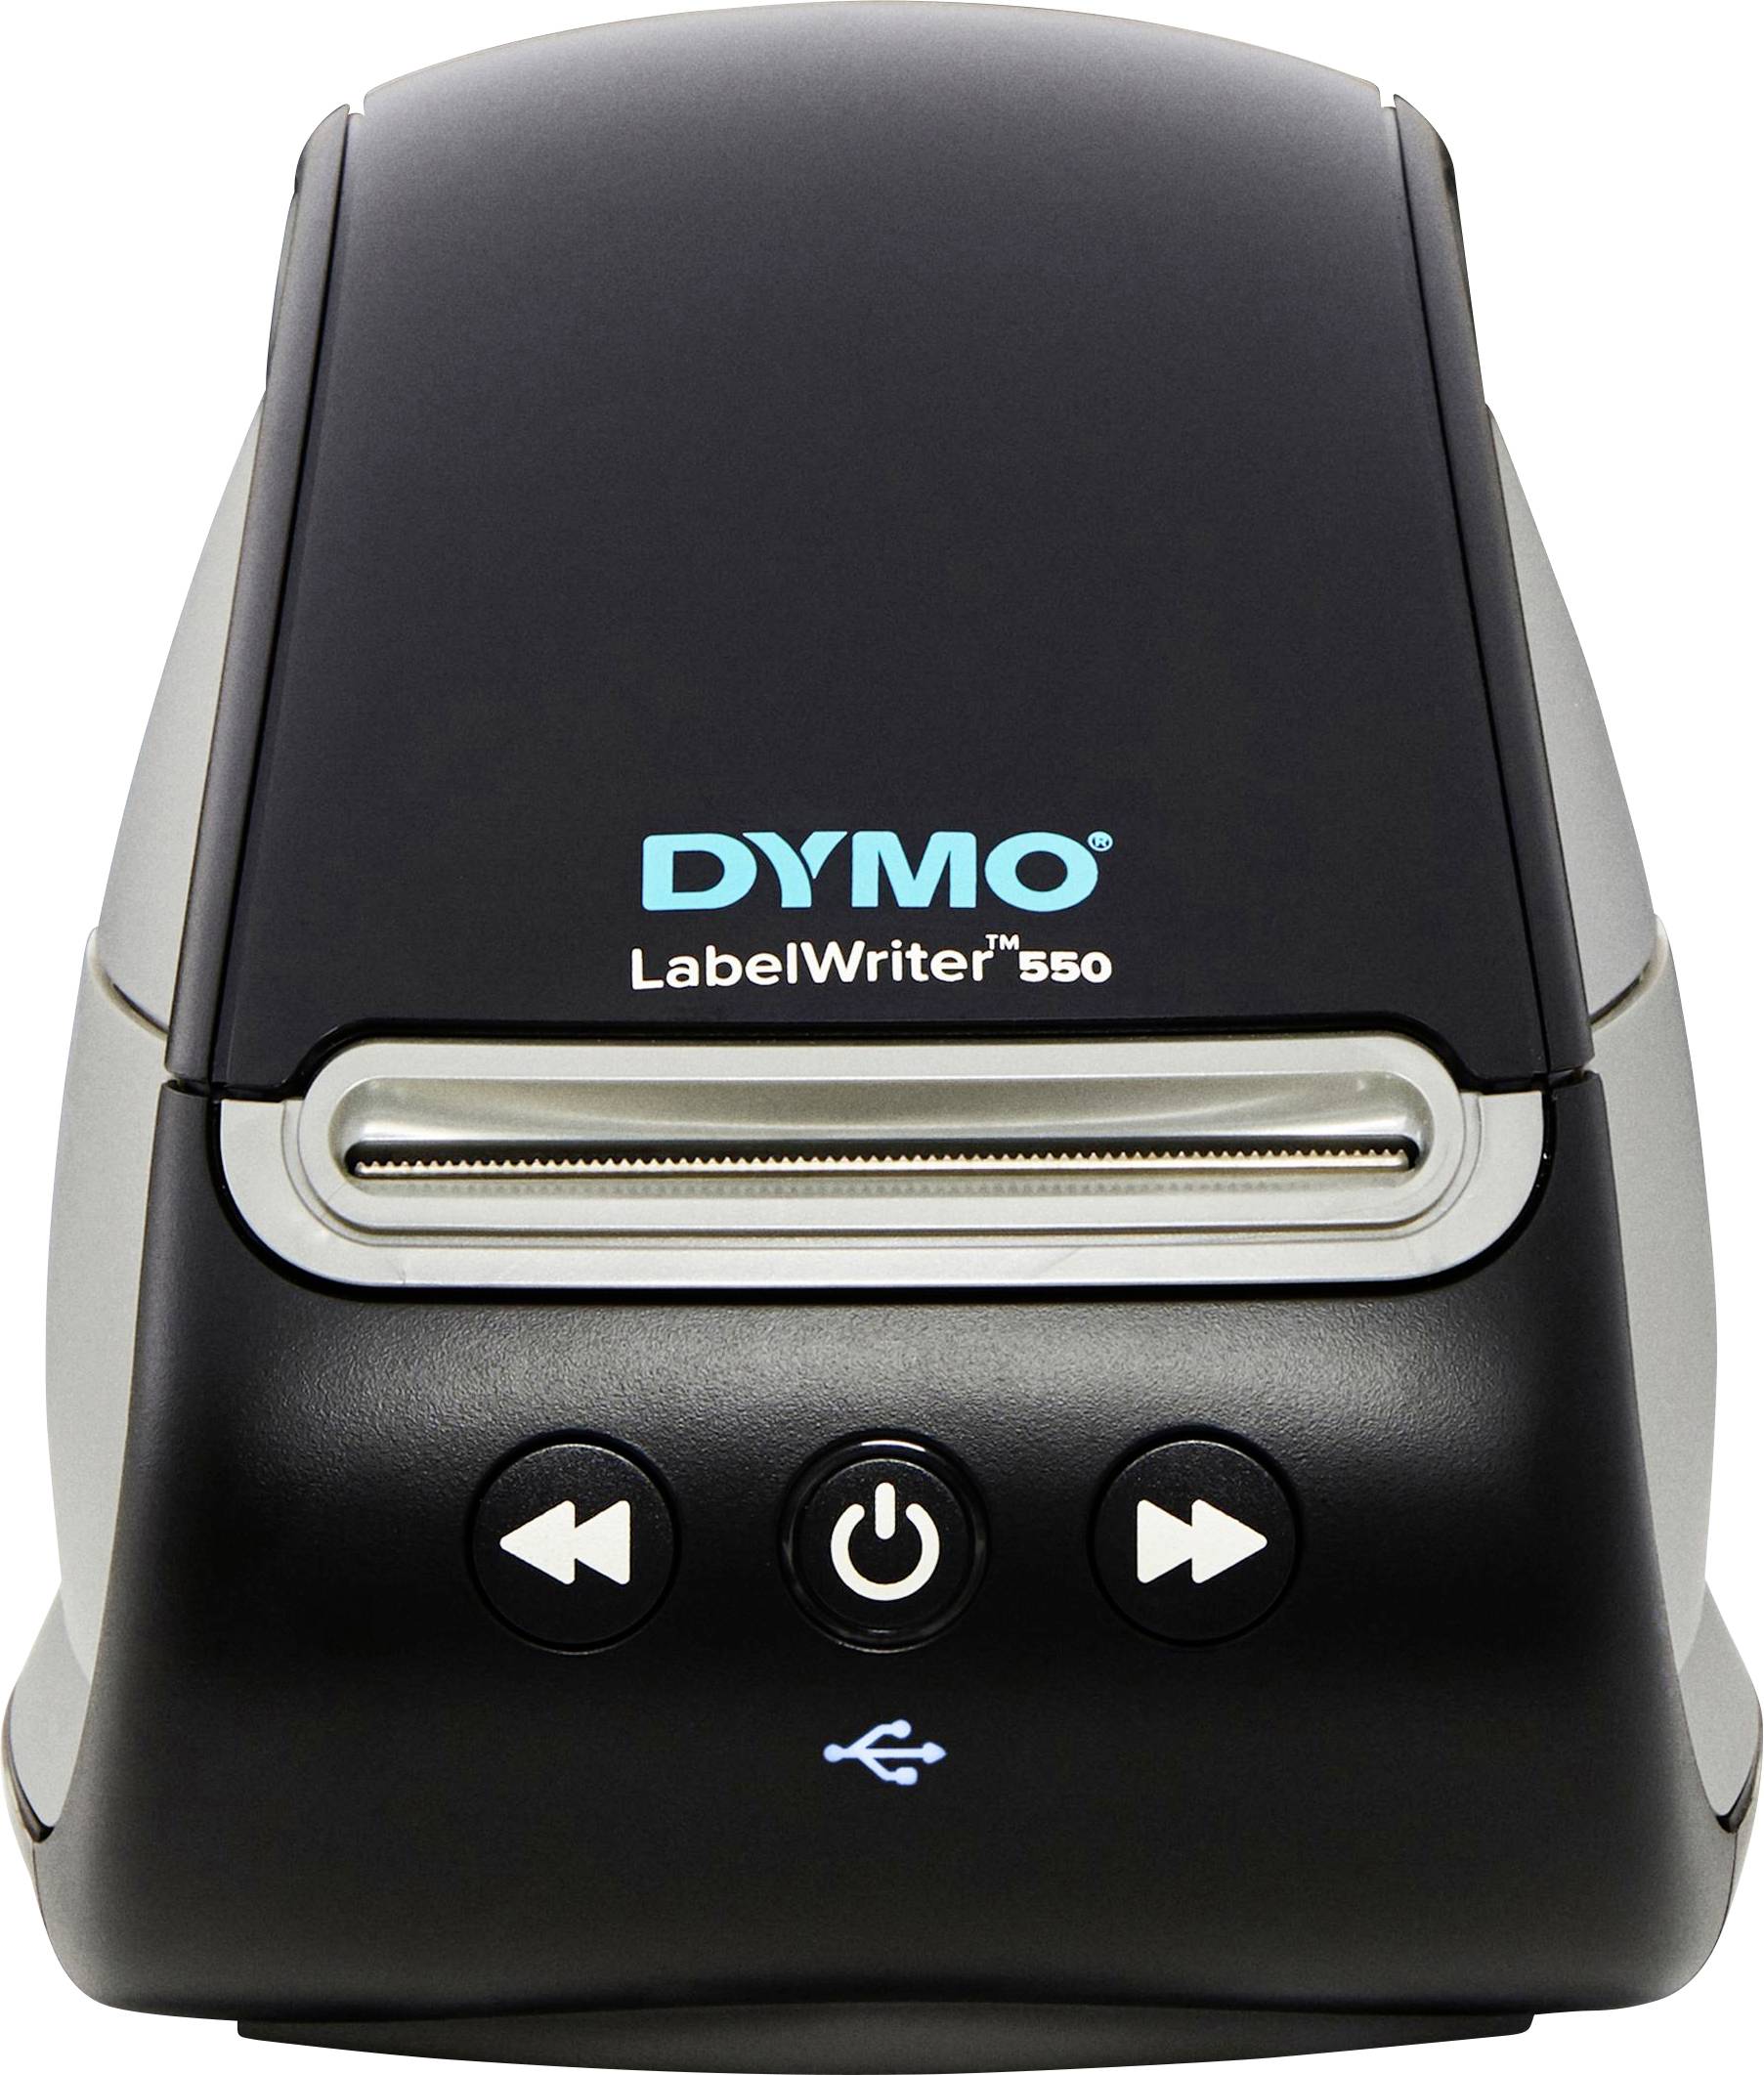 DYMO Labelwriter 550 Label Direct 300 x 300 dpi width: 61 mm USB | Conrad.com